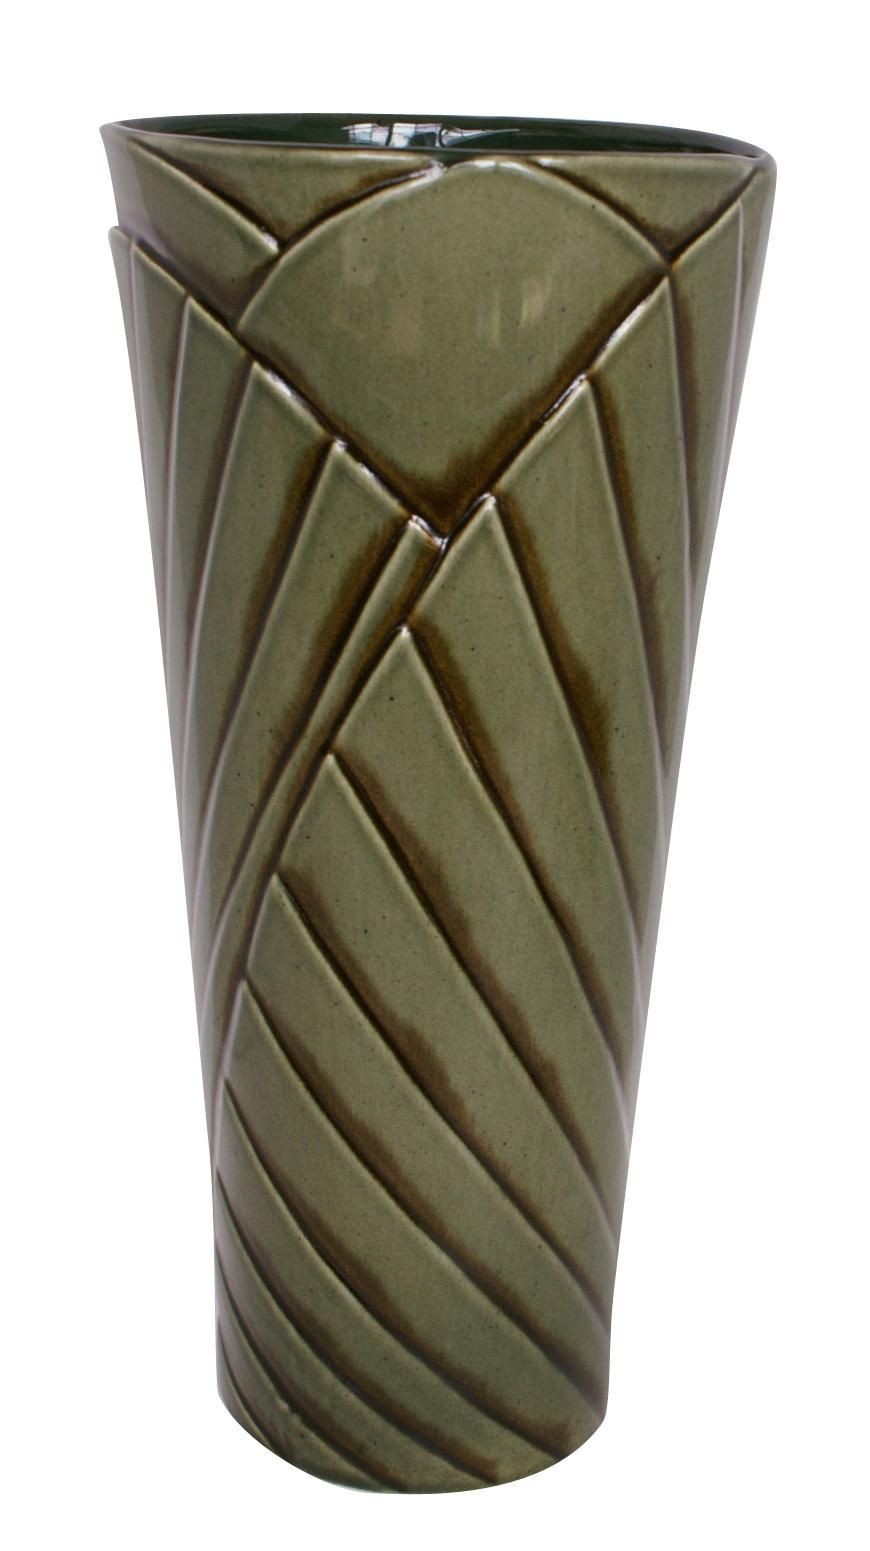 11 Popular Royal Haeger Vase Green 2022 free download royal haeger vase green of haeger potteries palm grove 20 ceramic vase lampsplus com for haeger potteries palm grove 20 ceramic vase lampsplus com